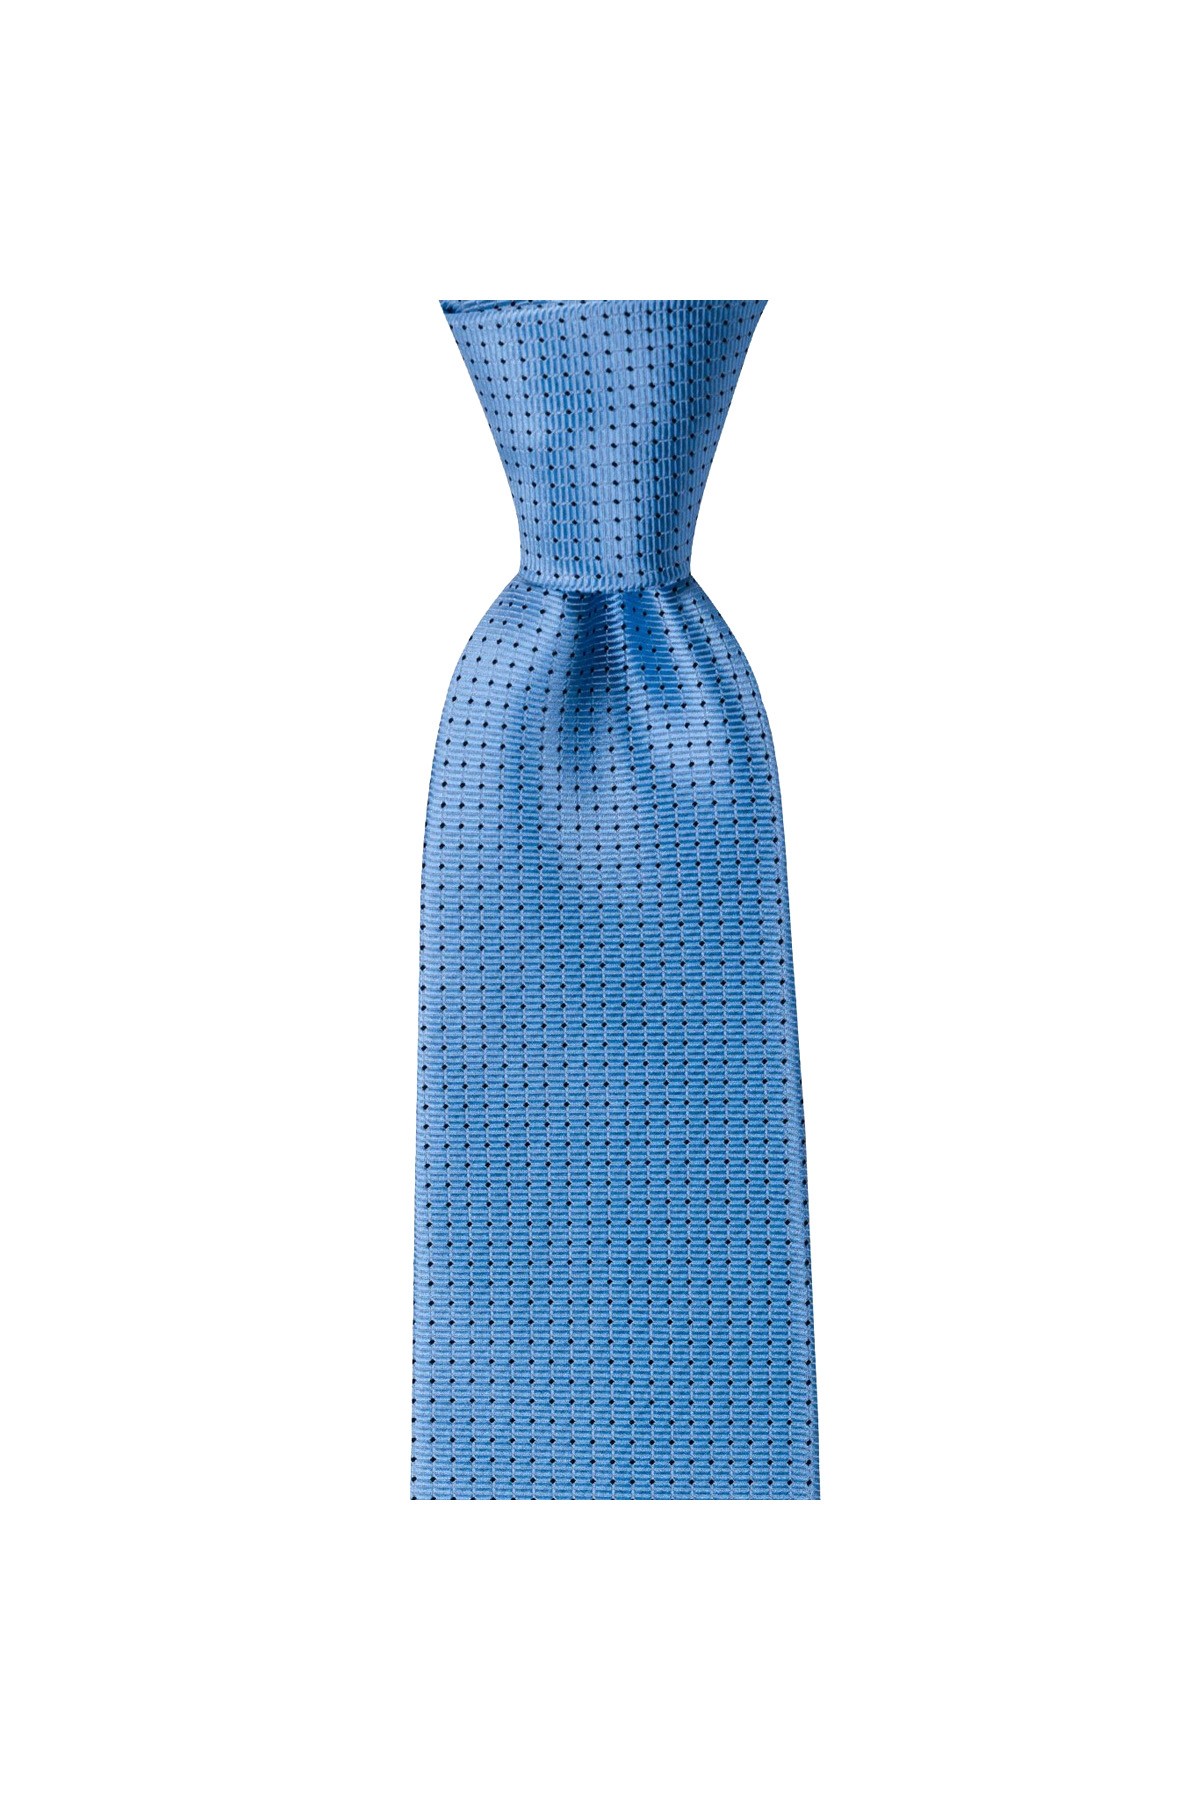 Klasik 8 cm genişliğinde mendilli kravat - Mavi